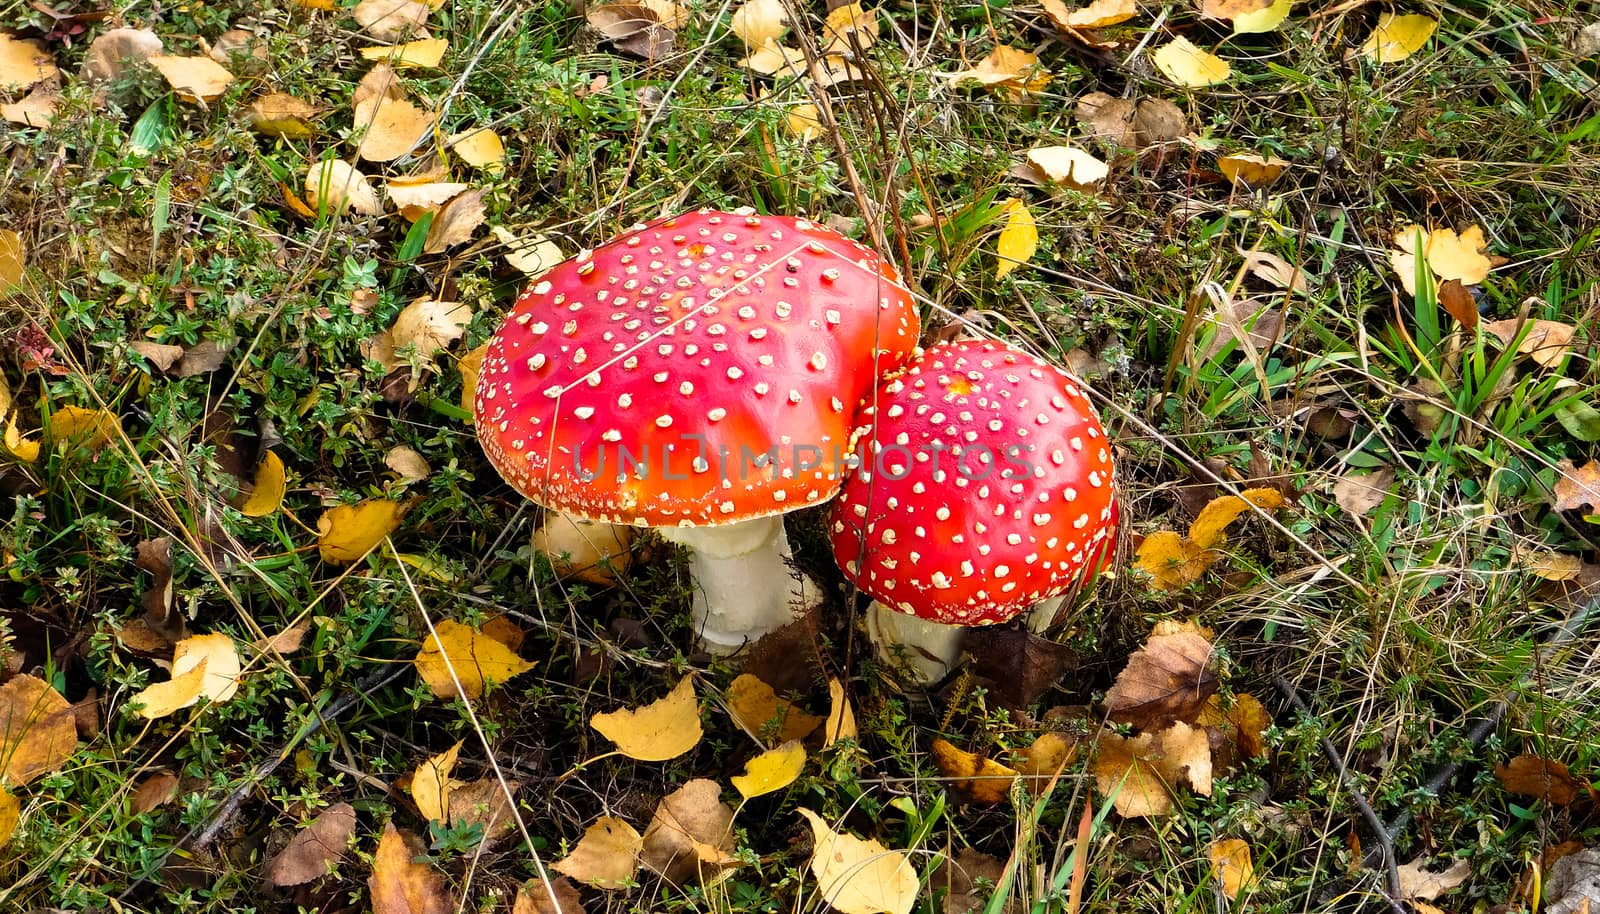 find beautiful mushrooms hidden in the grass by Oleczka11